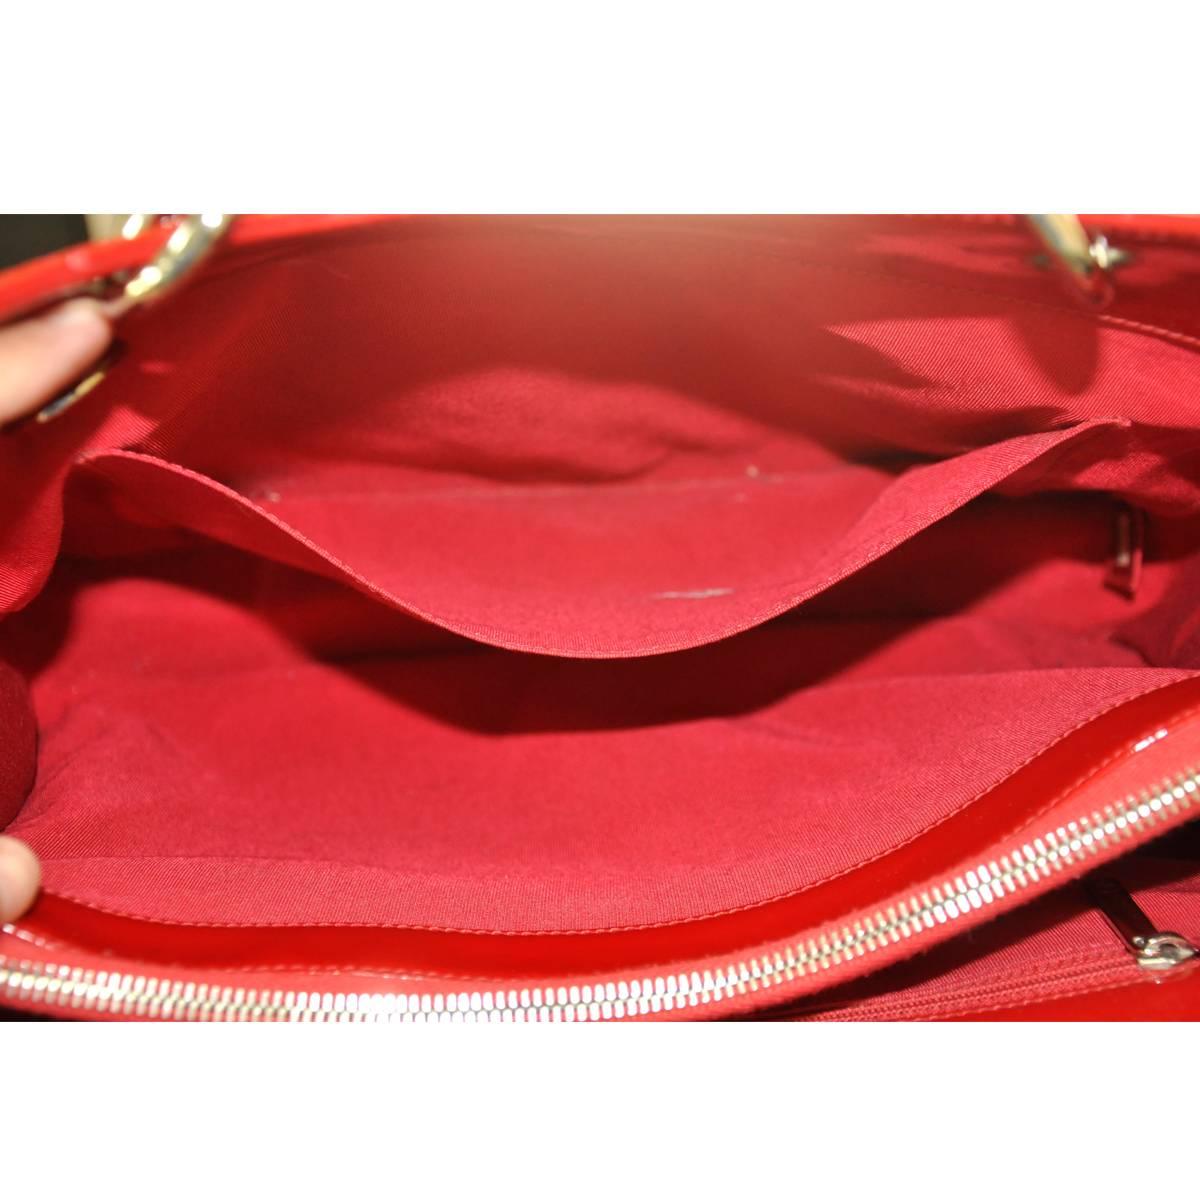 Chanel Red Patent Leather Grand Shopper Tote GST Handbag 4